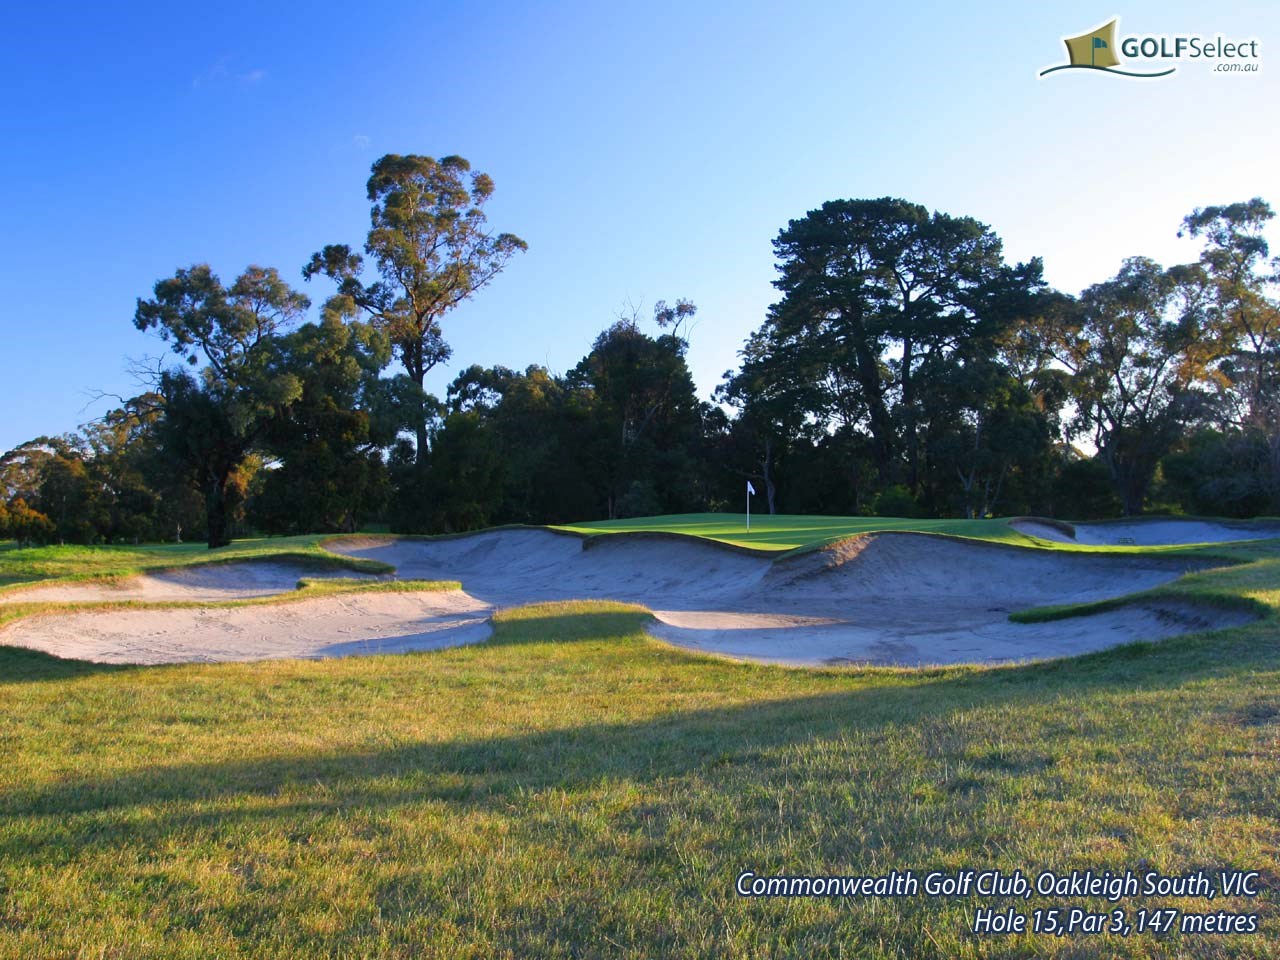 Commonwealth Golf Club Hole 15, Par 3, 147 metres